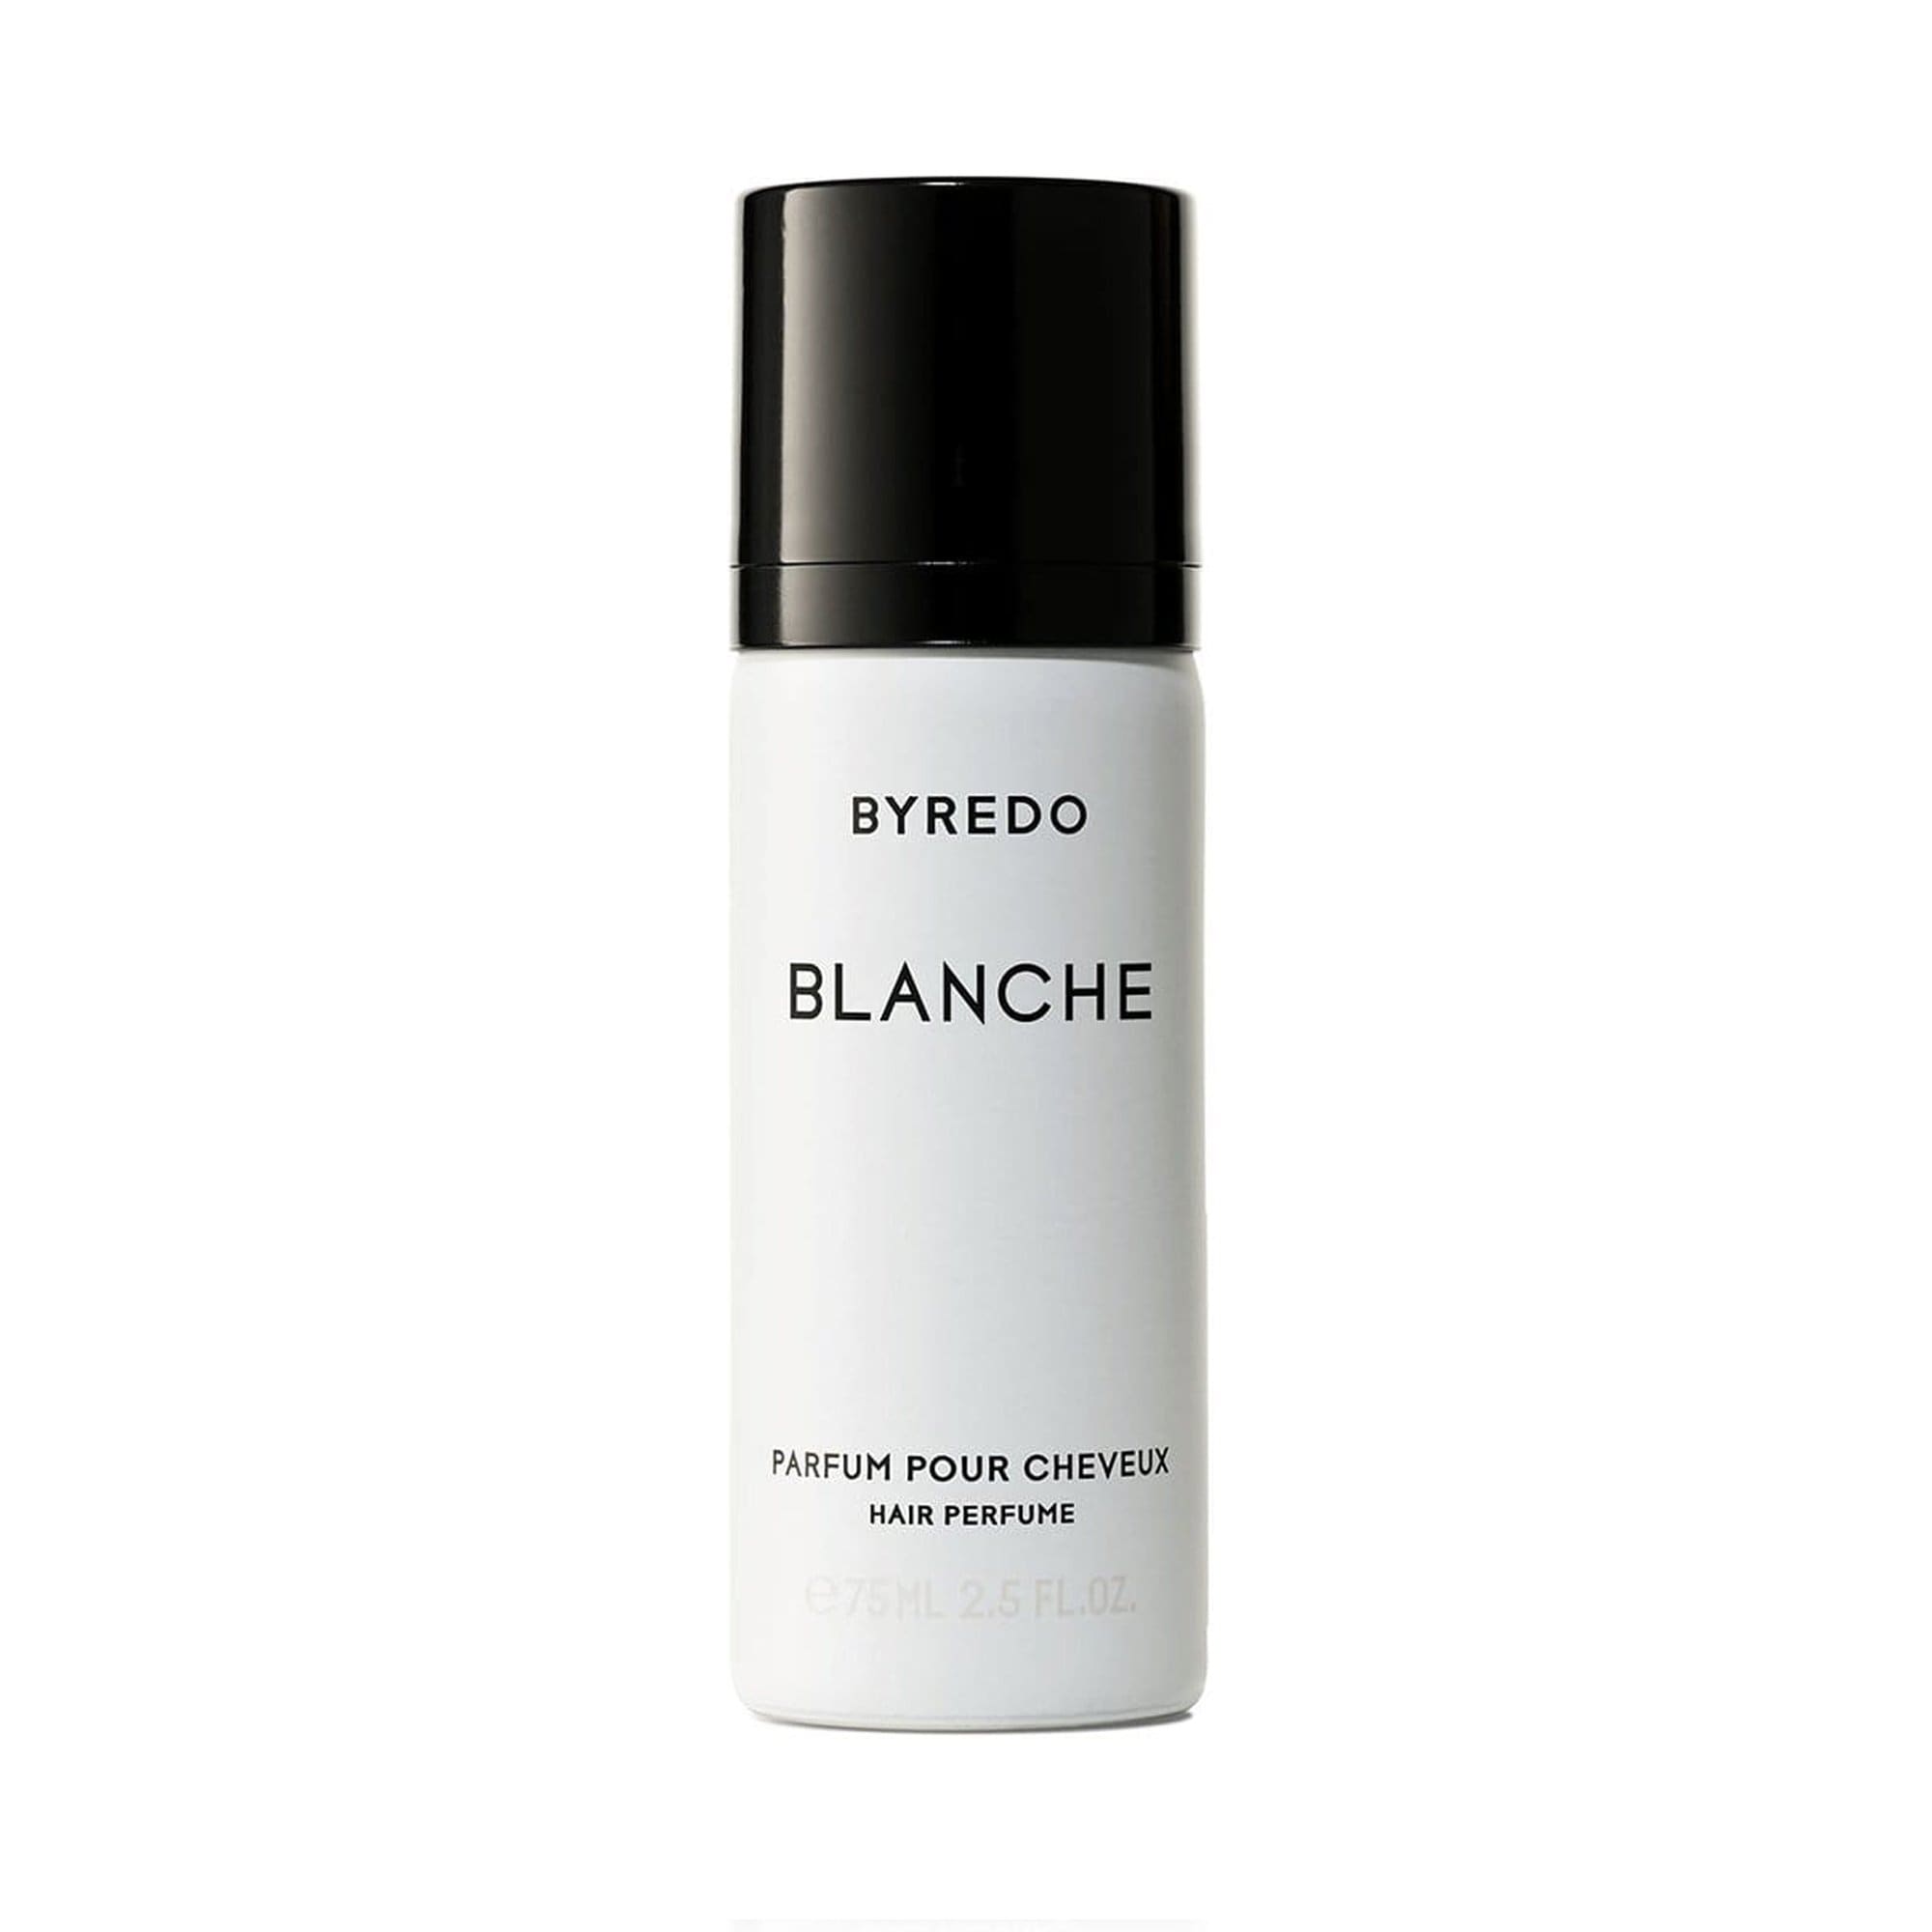 Blanche BYREDO Hair Perfume